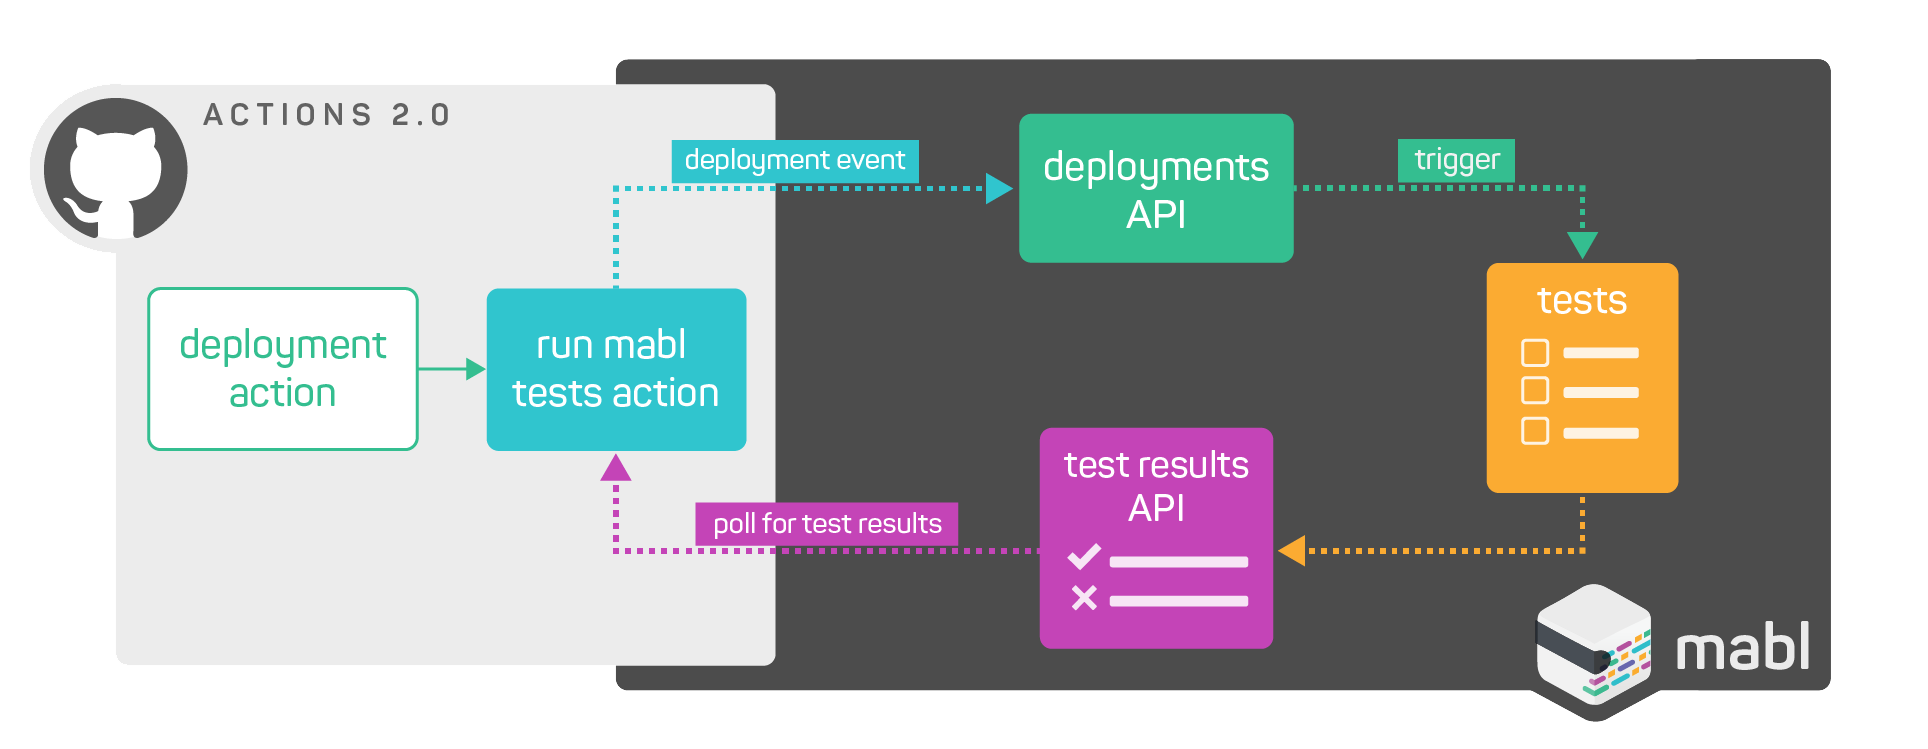 mabl botが、GitHubのCheckやActionとしてmablのテストを実行する堅牢なツールであることを示す図